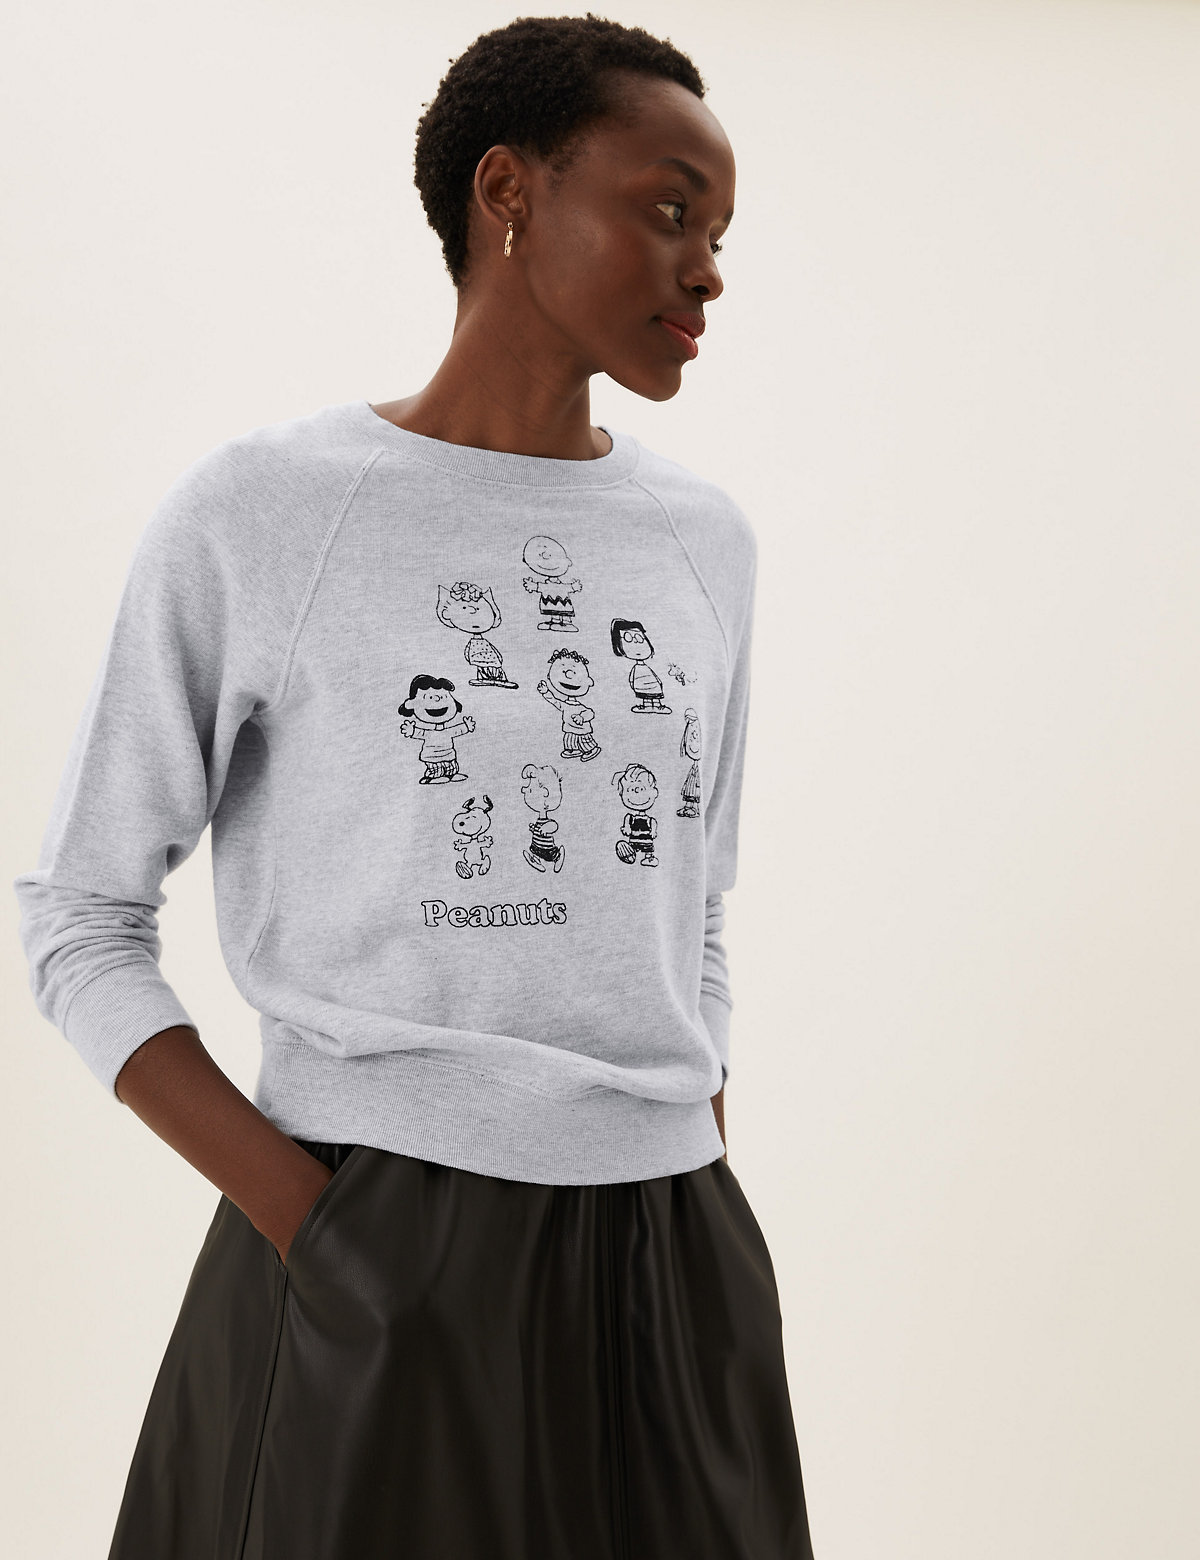 The Snoopy Sweatshirt